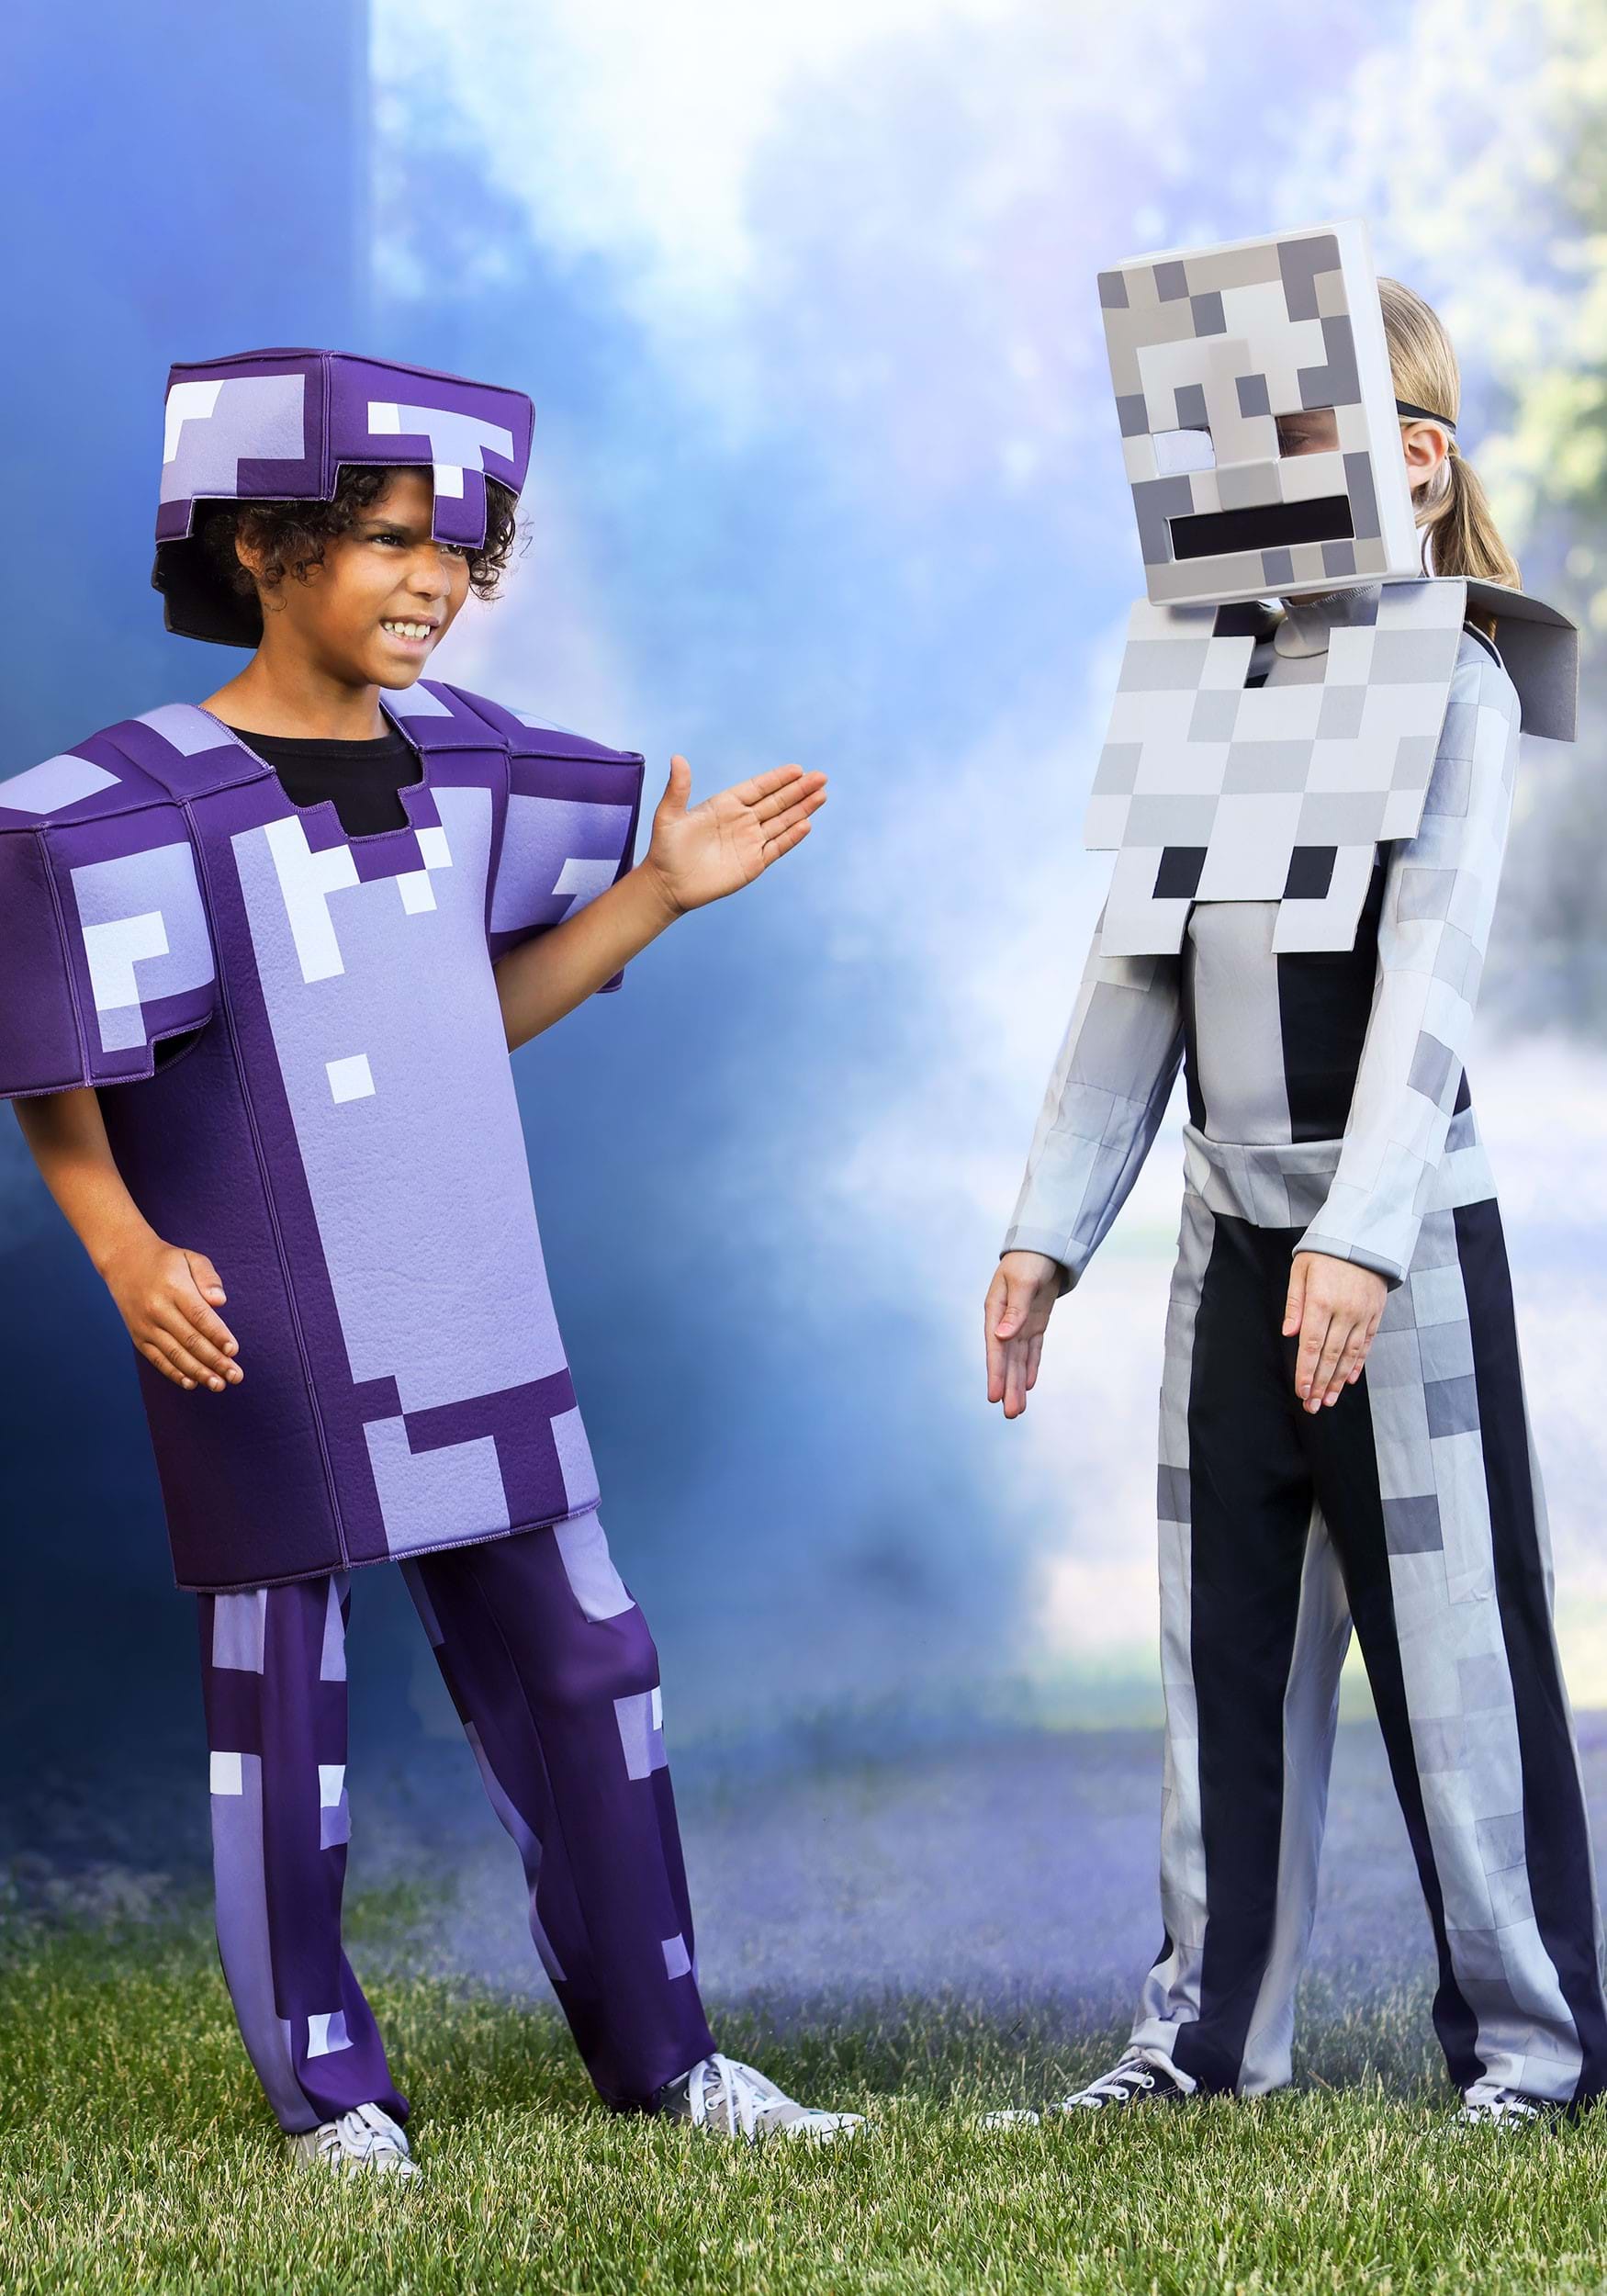 Minecraft Zombie Deluxe Child Costume, Small (4-6)